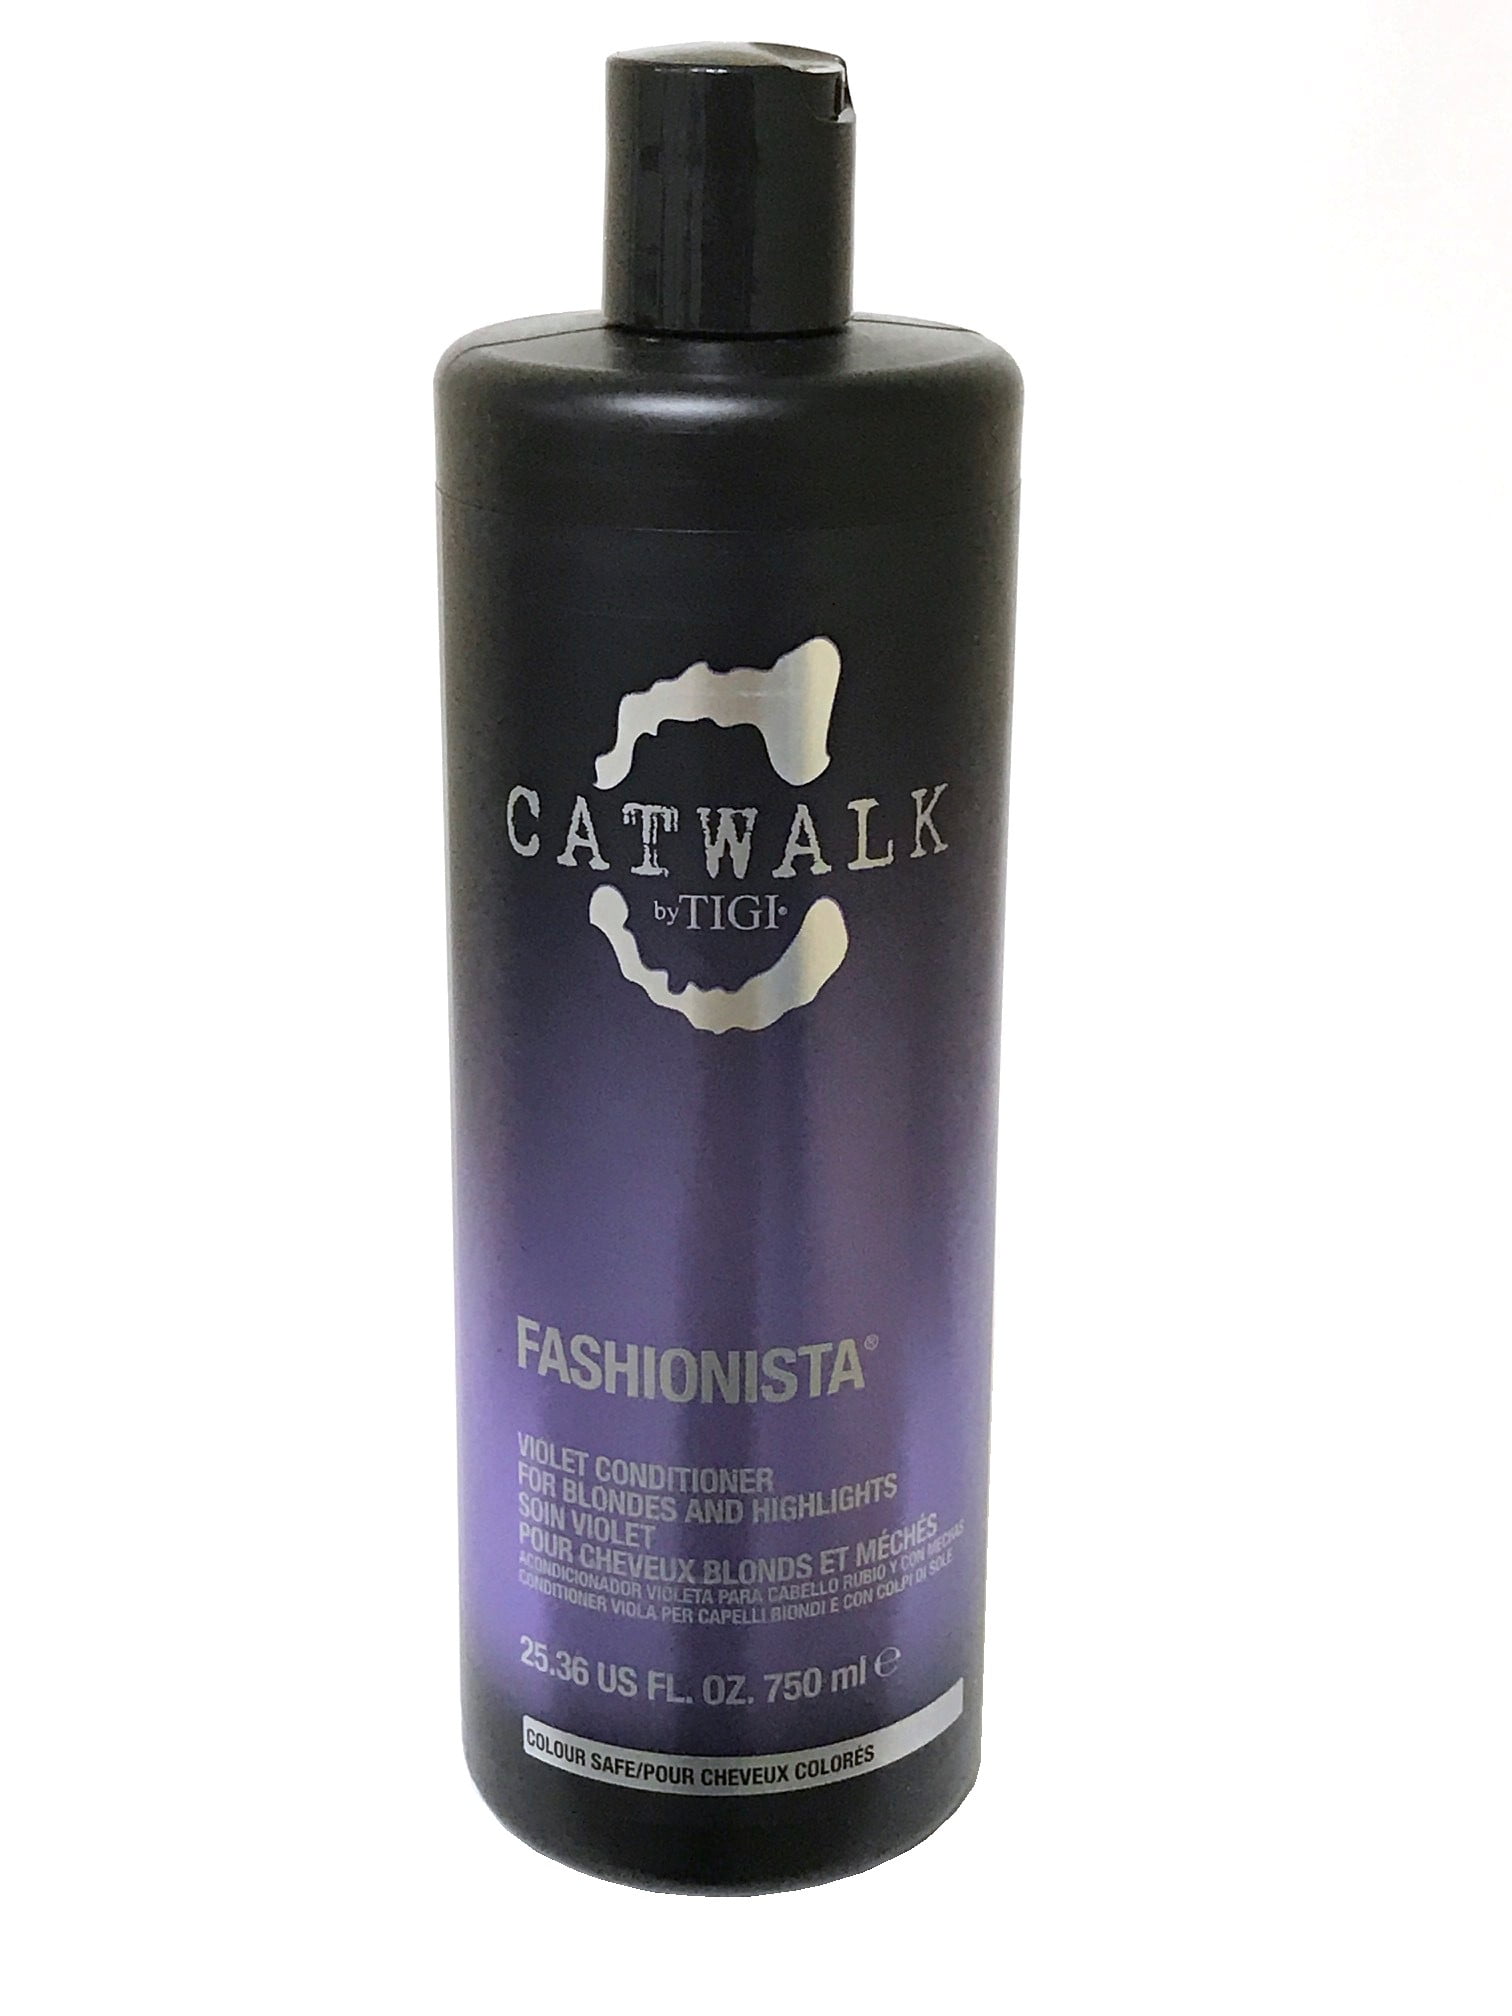 Catwalk Curls Rock Leave-In Moisturizer 8.5 oz Walmart.com